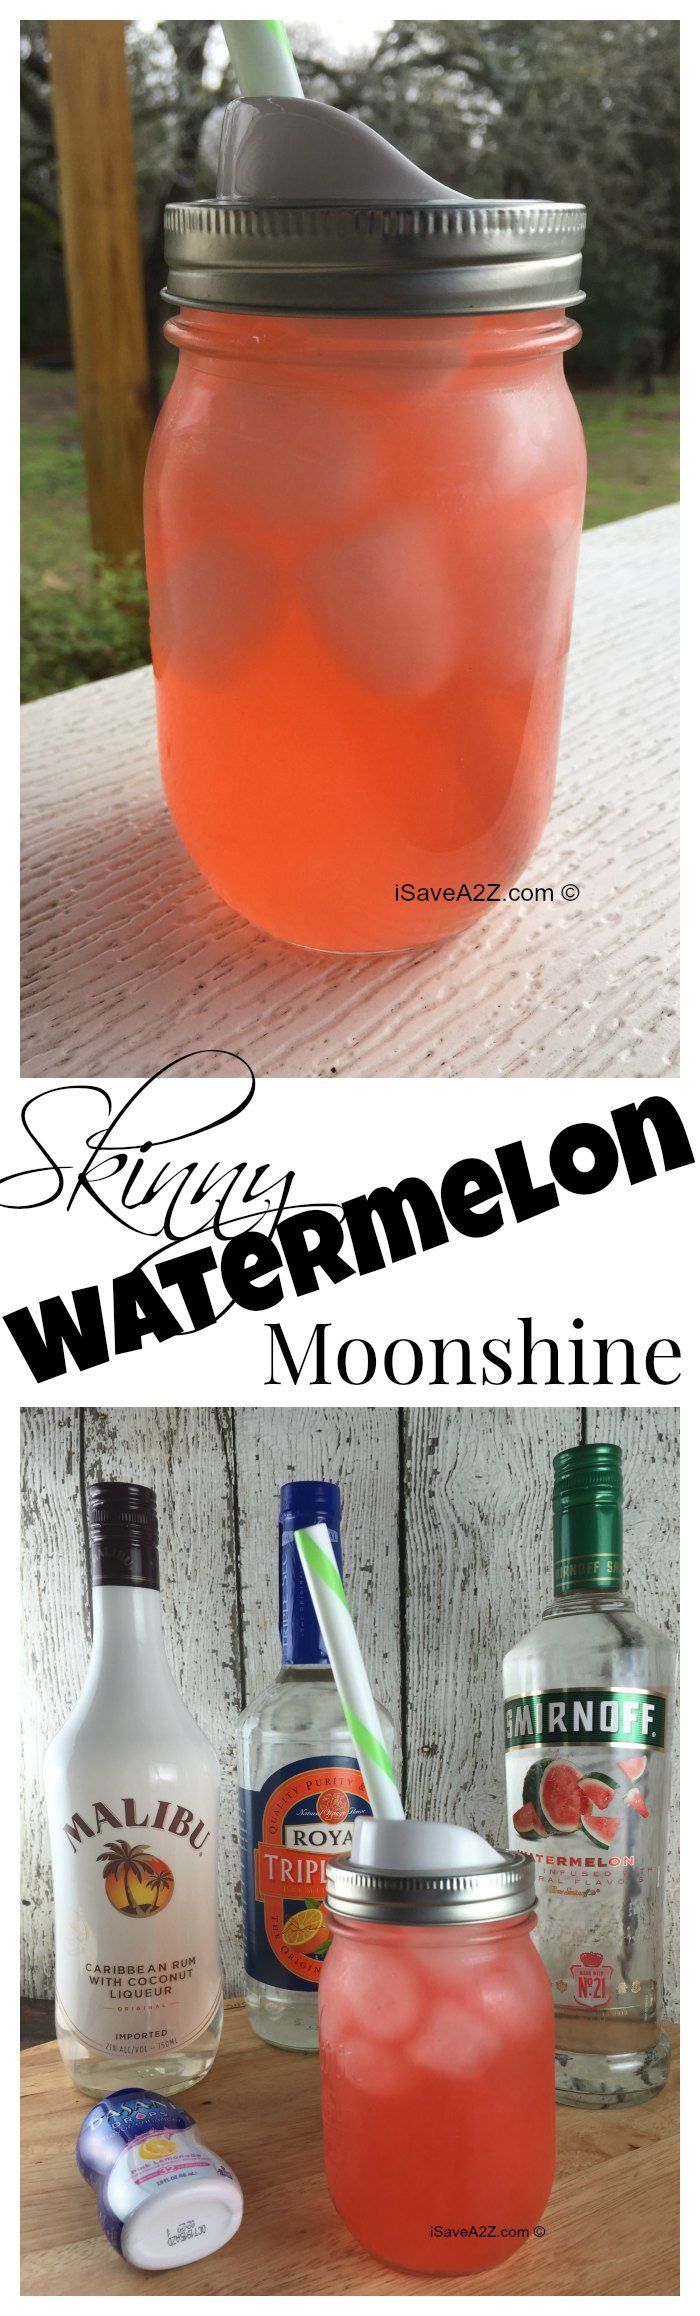 The best skinny Watermelon moonshine recipe